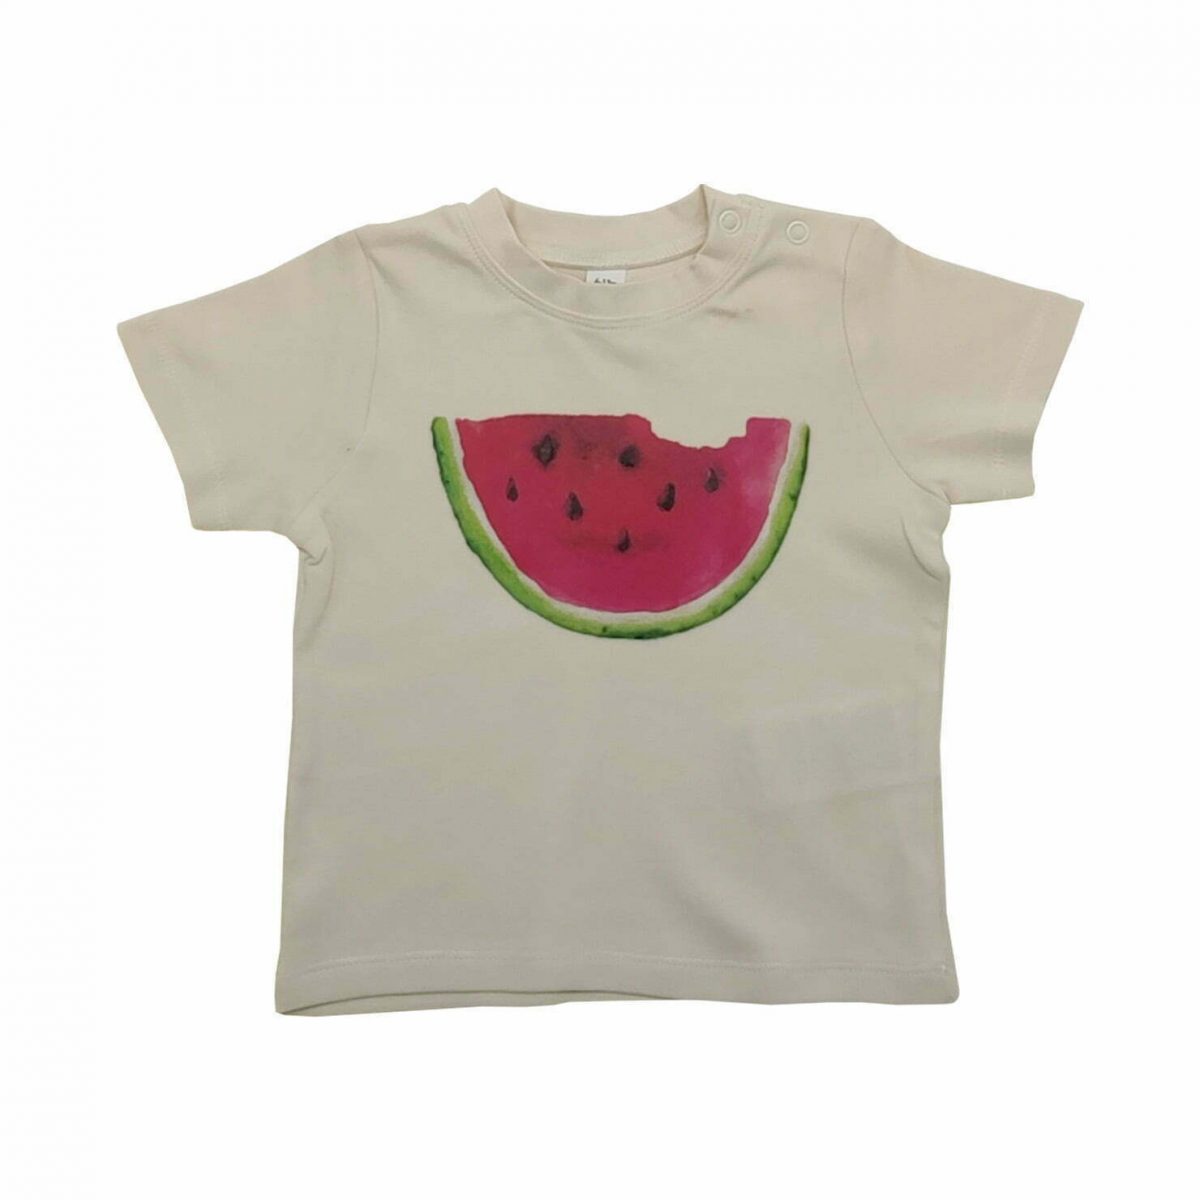 tienda de ropa de niño Camiseta Sandia Baby